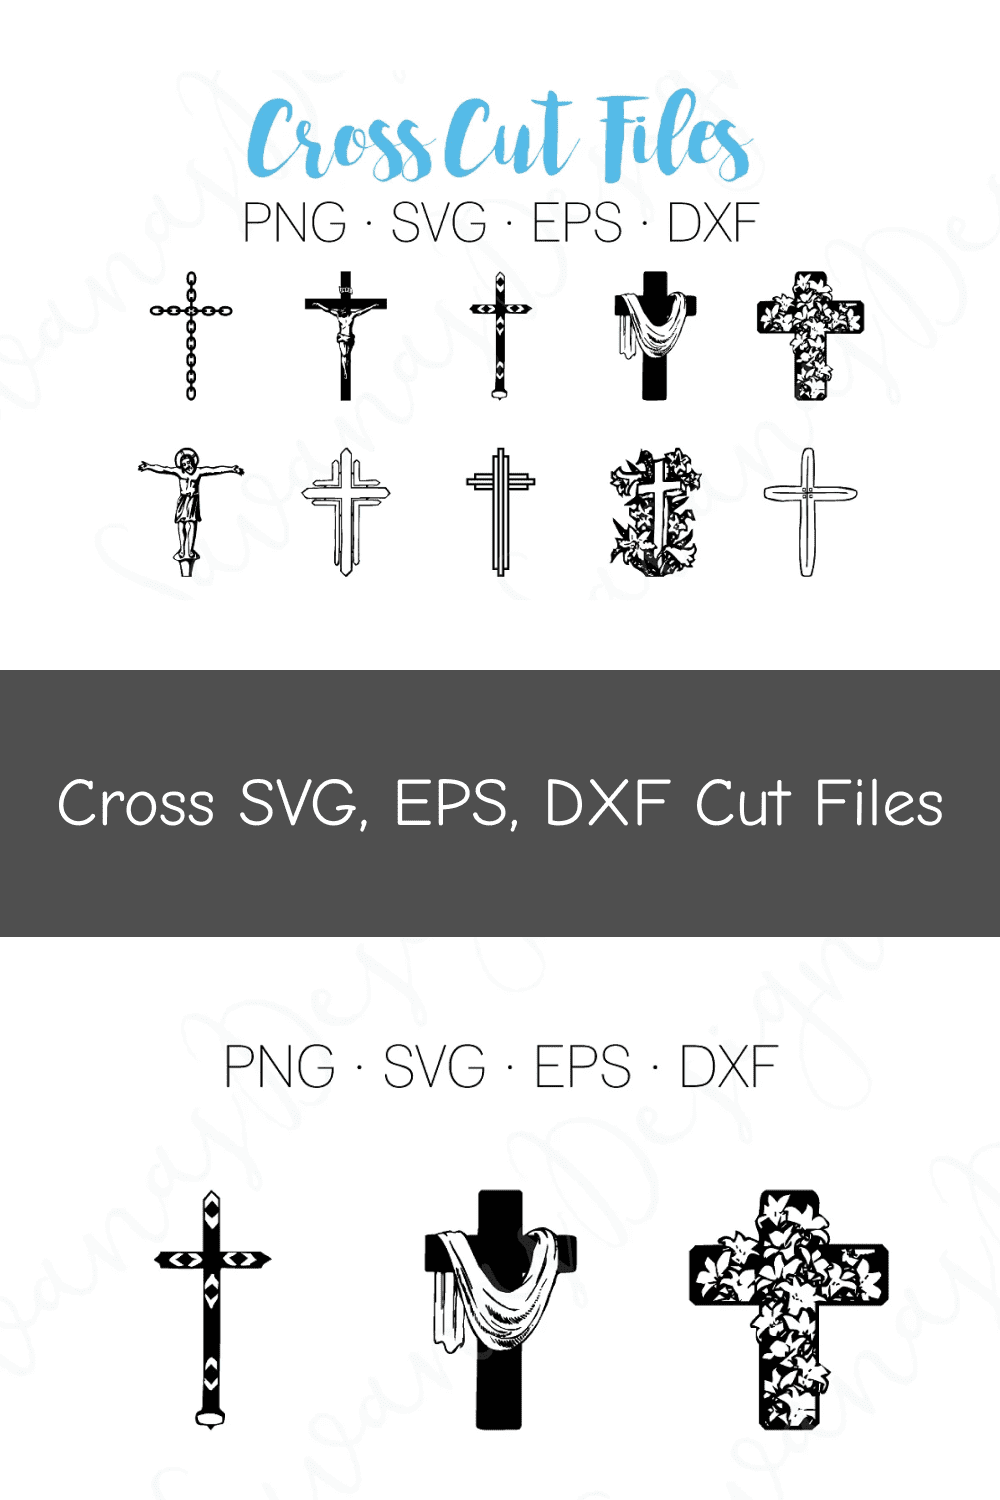 Cross SVG, EPS, DXF Cut Files.